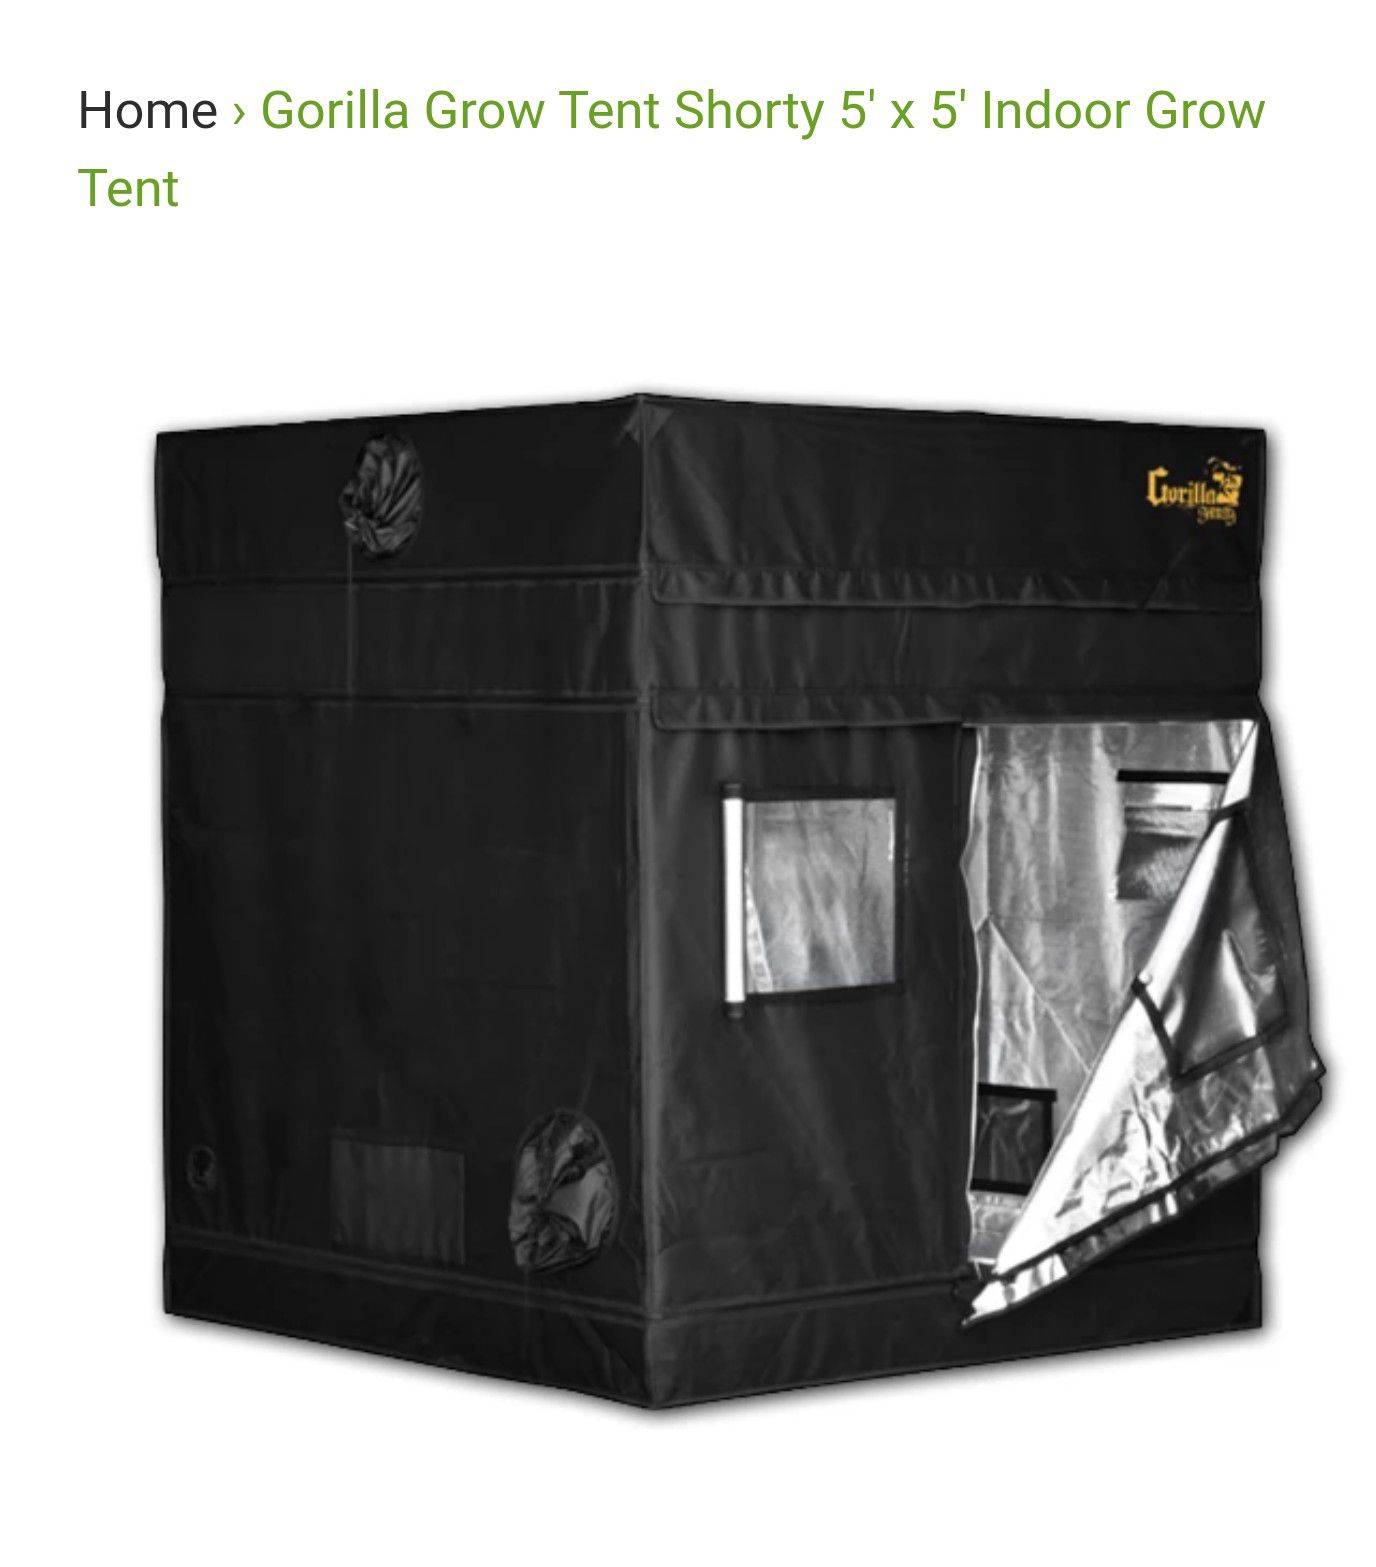 Gorilla Grow Tent